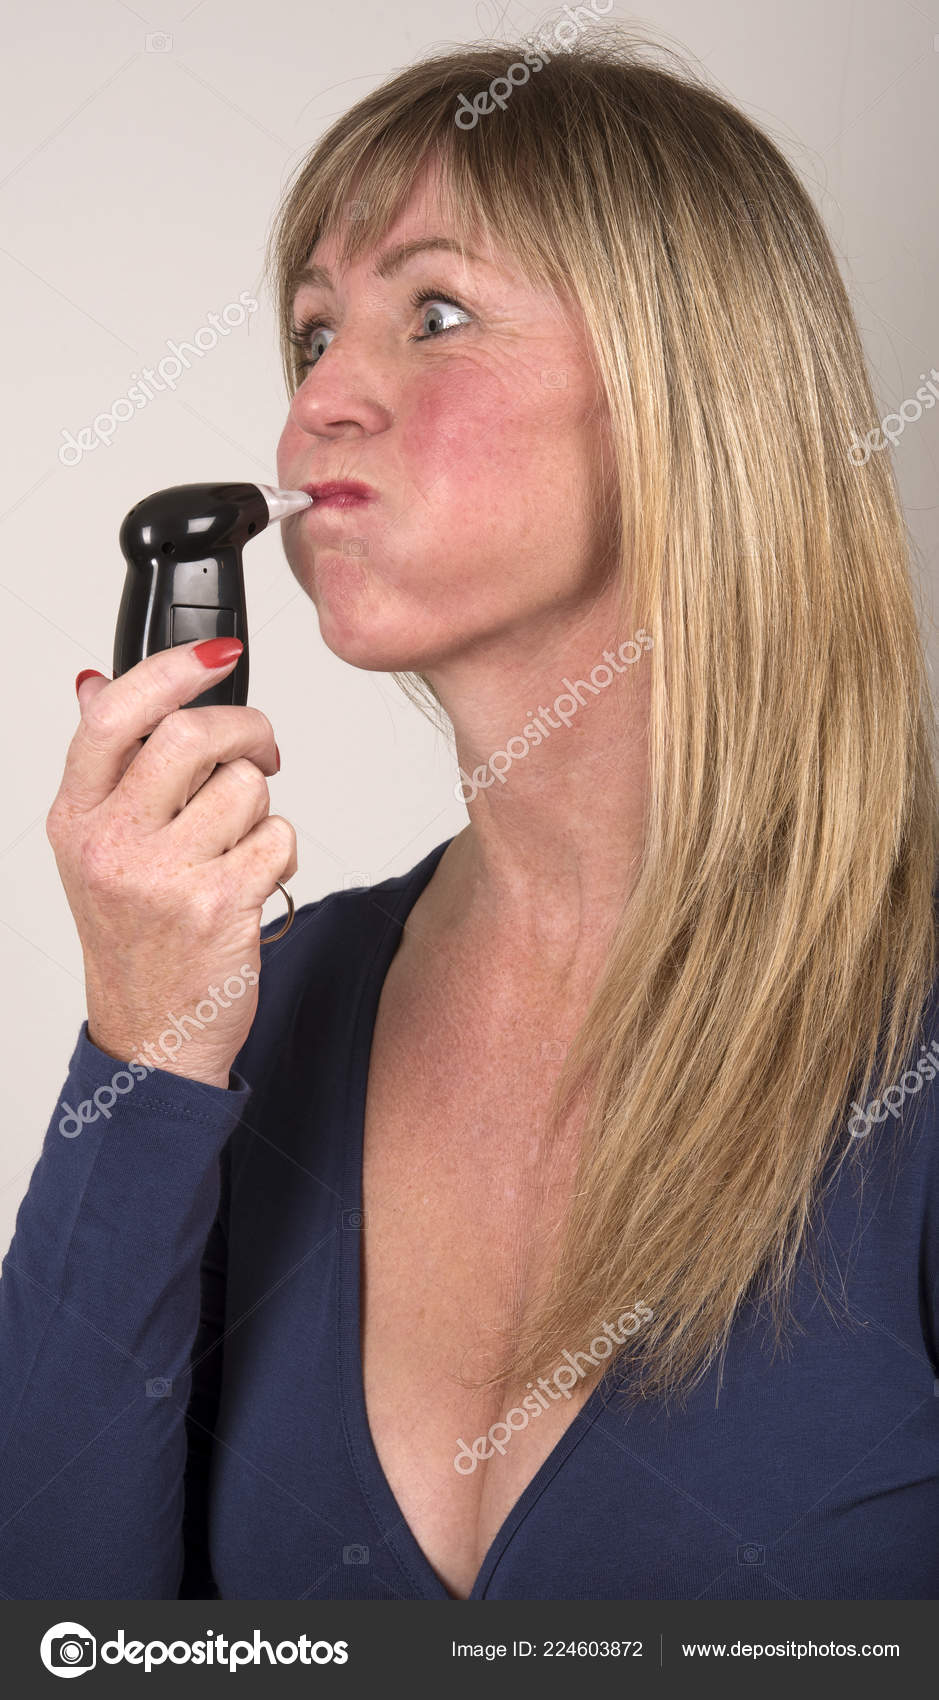 https://st4.depositphotos.com/4479867/22460/i/1600/depositphotos_224603872-stock-photo-woman-using-personal-breathalyser-check.jpg